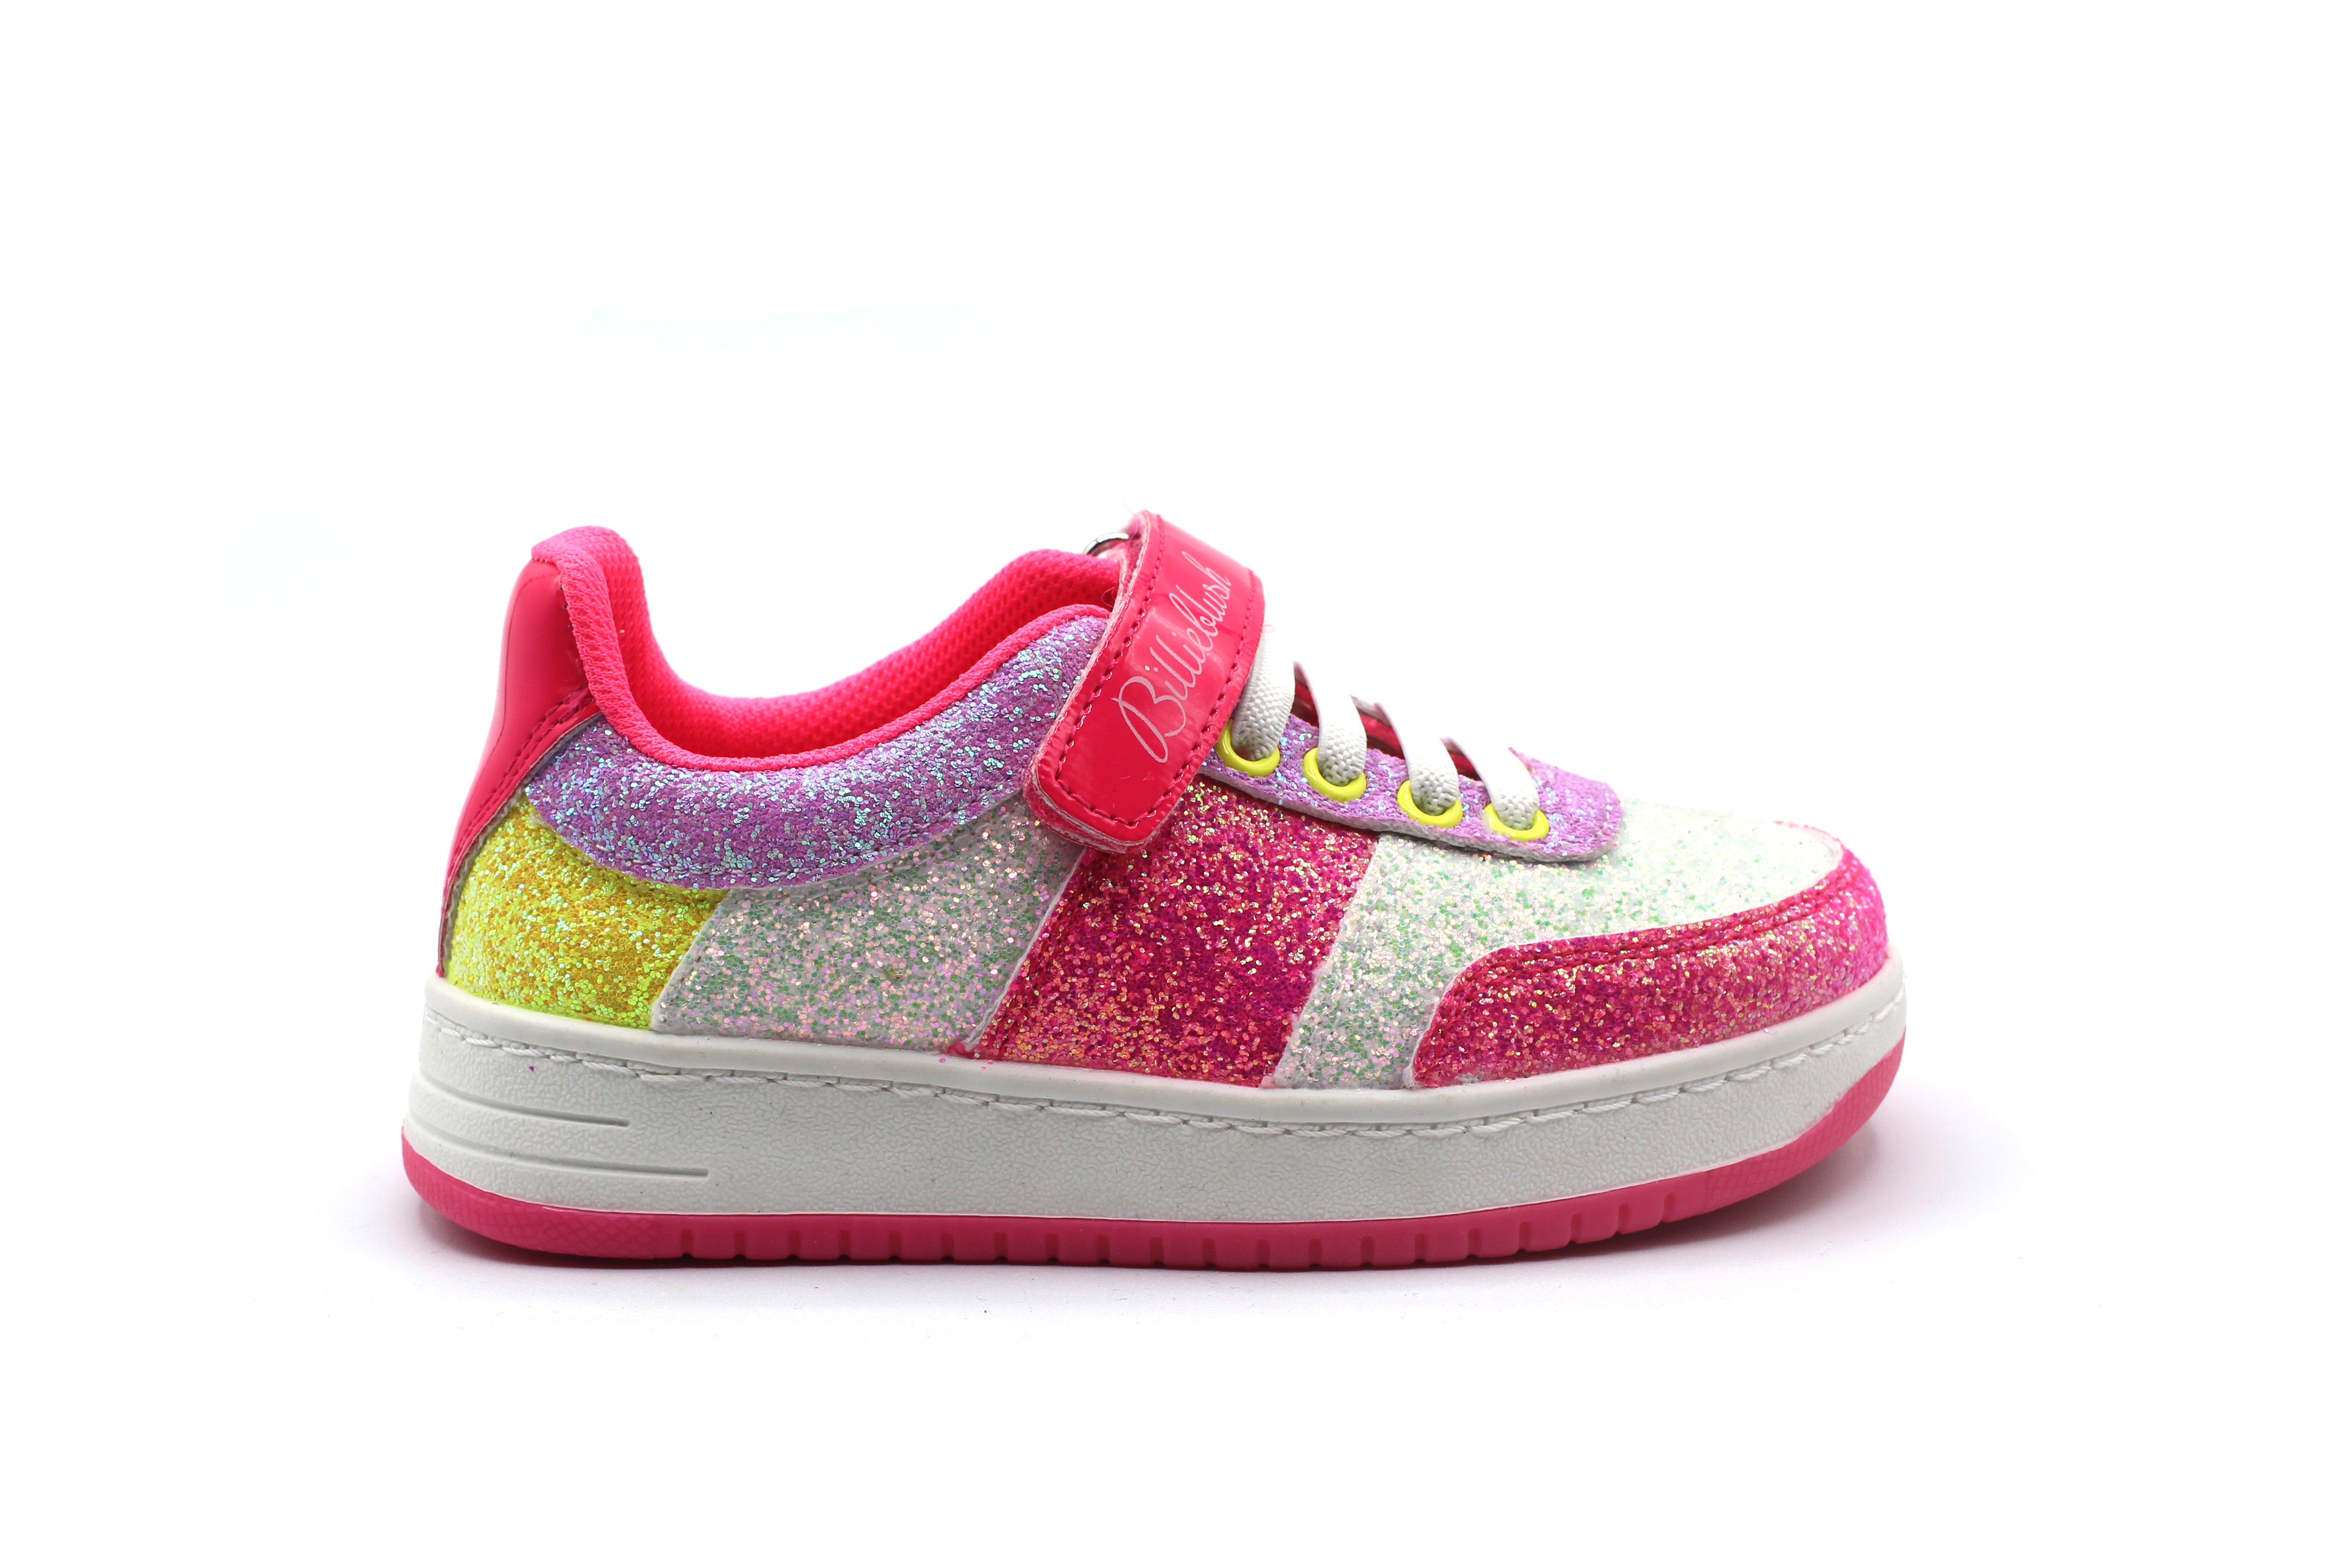 Billie Blush Lace Glitter Sneaker